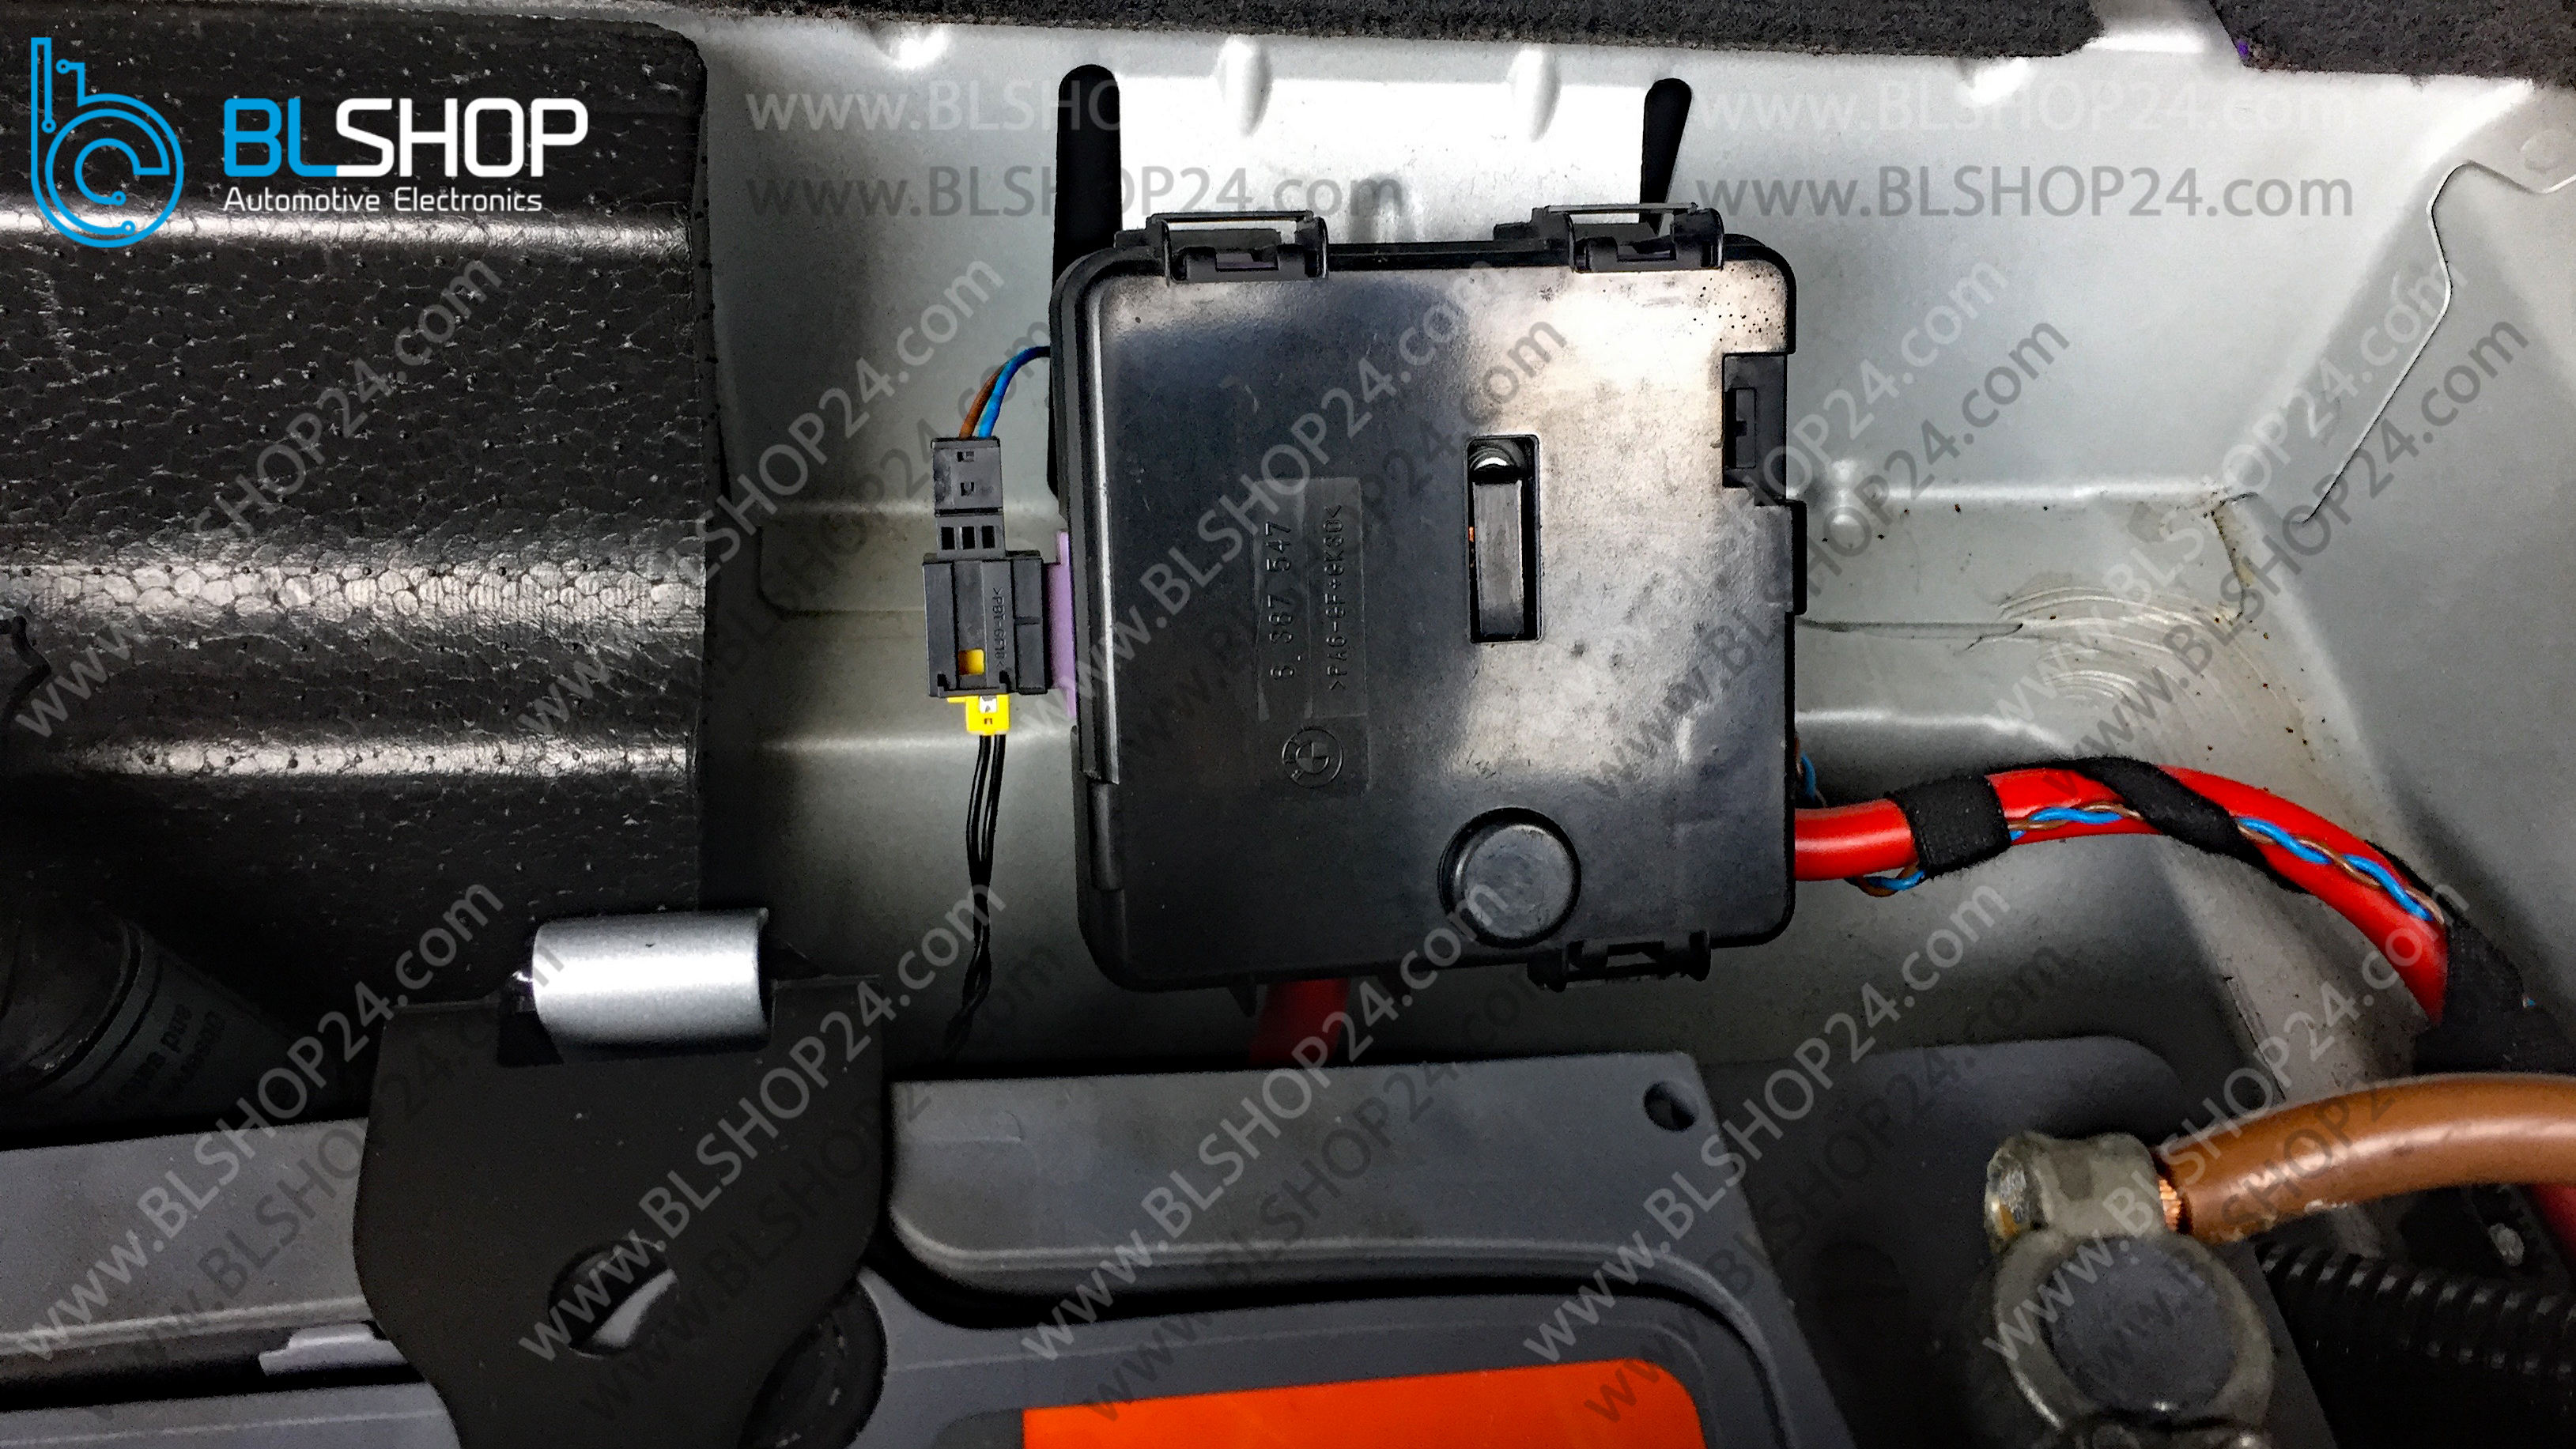 Battery Safety Terminal emulator installation - Step 2